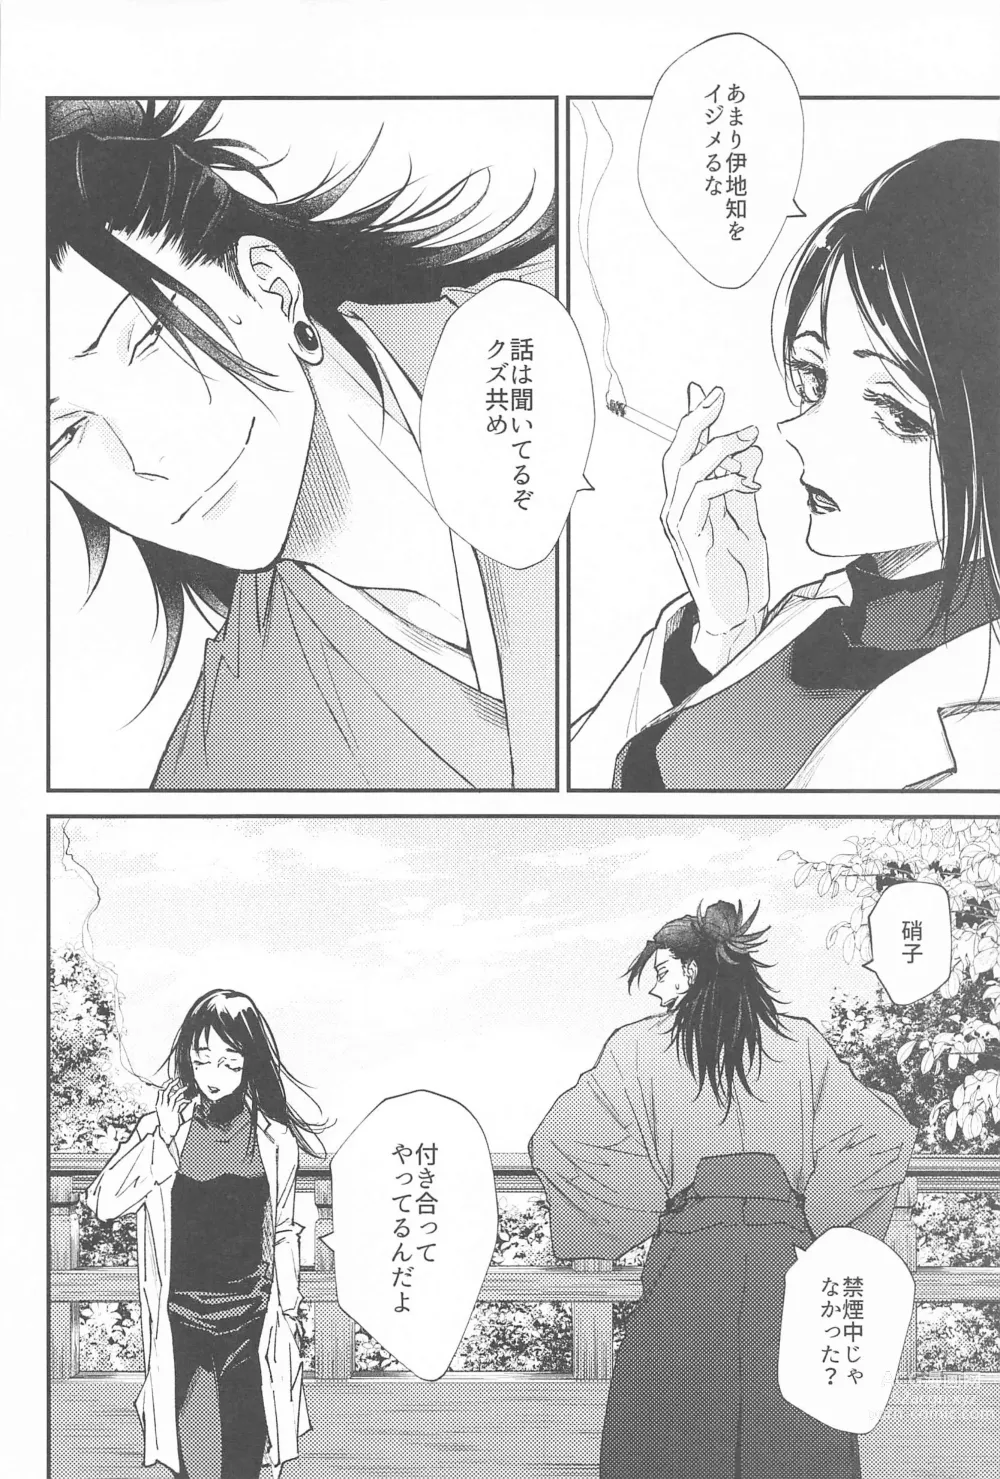 Page 3 of doujinshi Kojirase Blue to Koi Wazurai 2